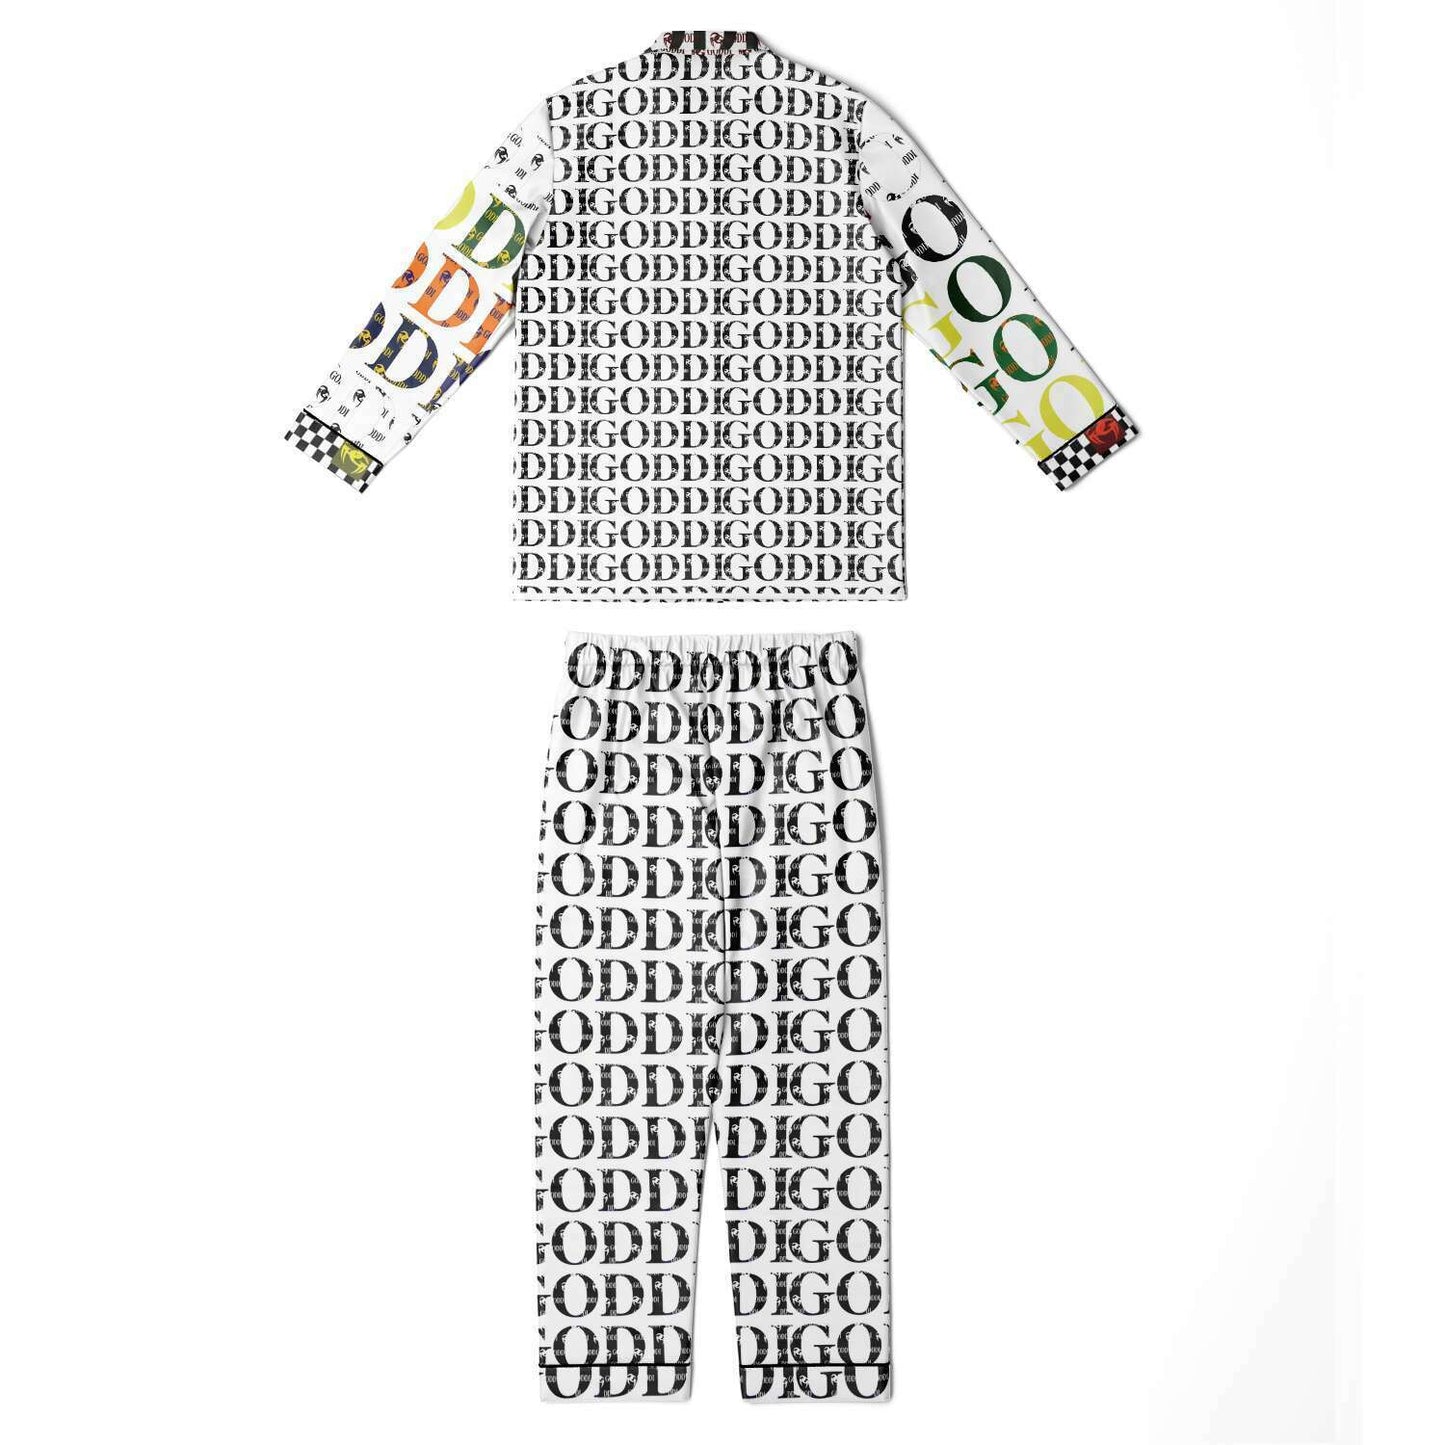 Men's GG Logo Print Satin Pajamas  2pc, M  $90.10 GODDI